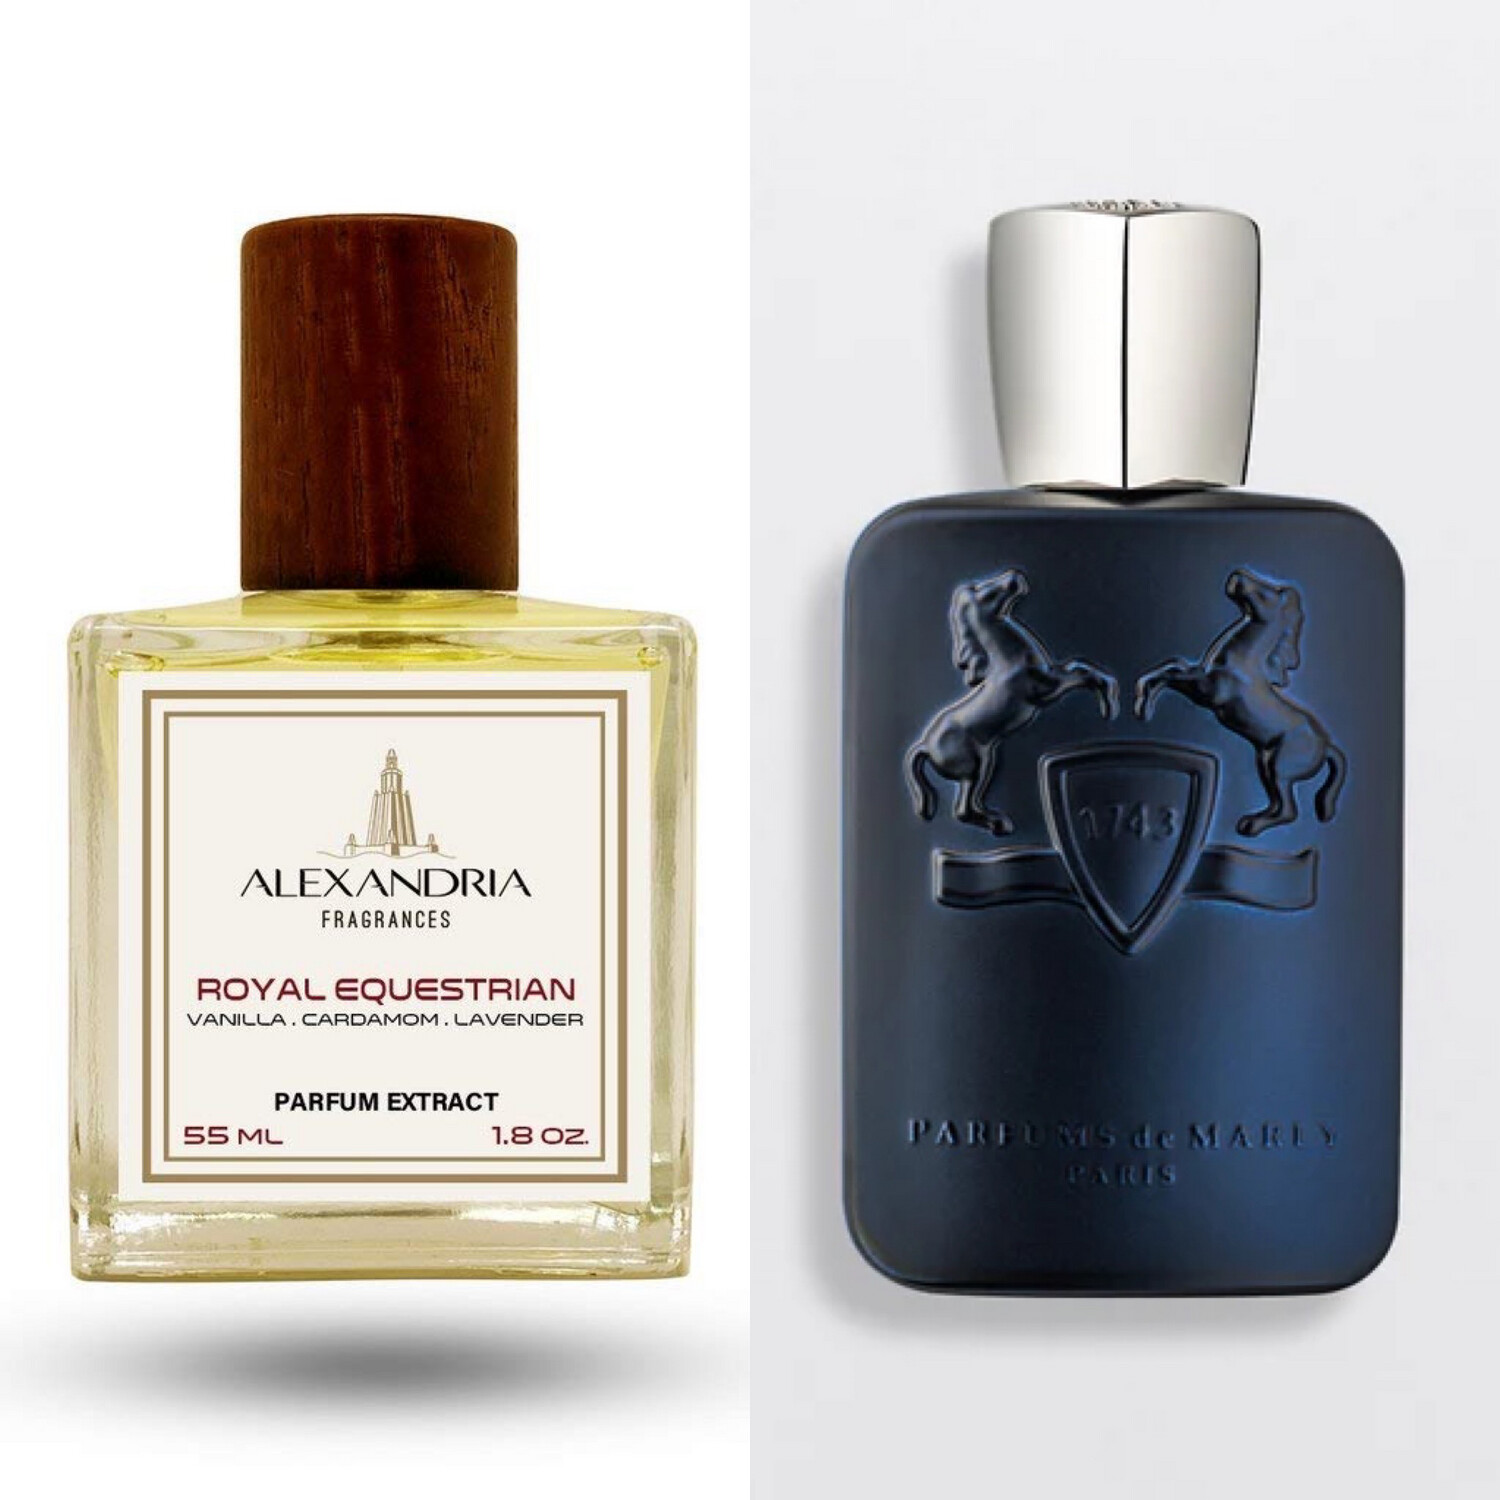 Royal Equestrian Inspirado en Layton by Parfums de Marly 55ml extracto de perfume Alexandria Fragrances